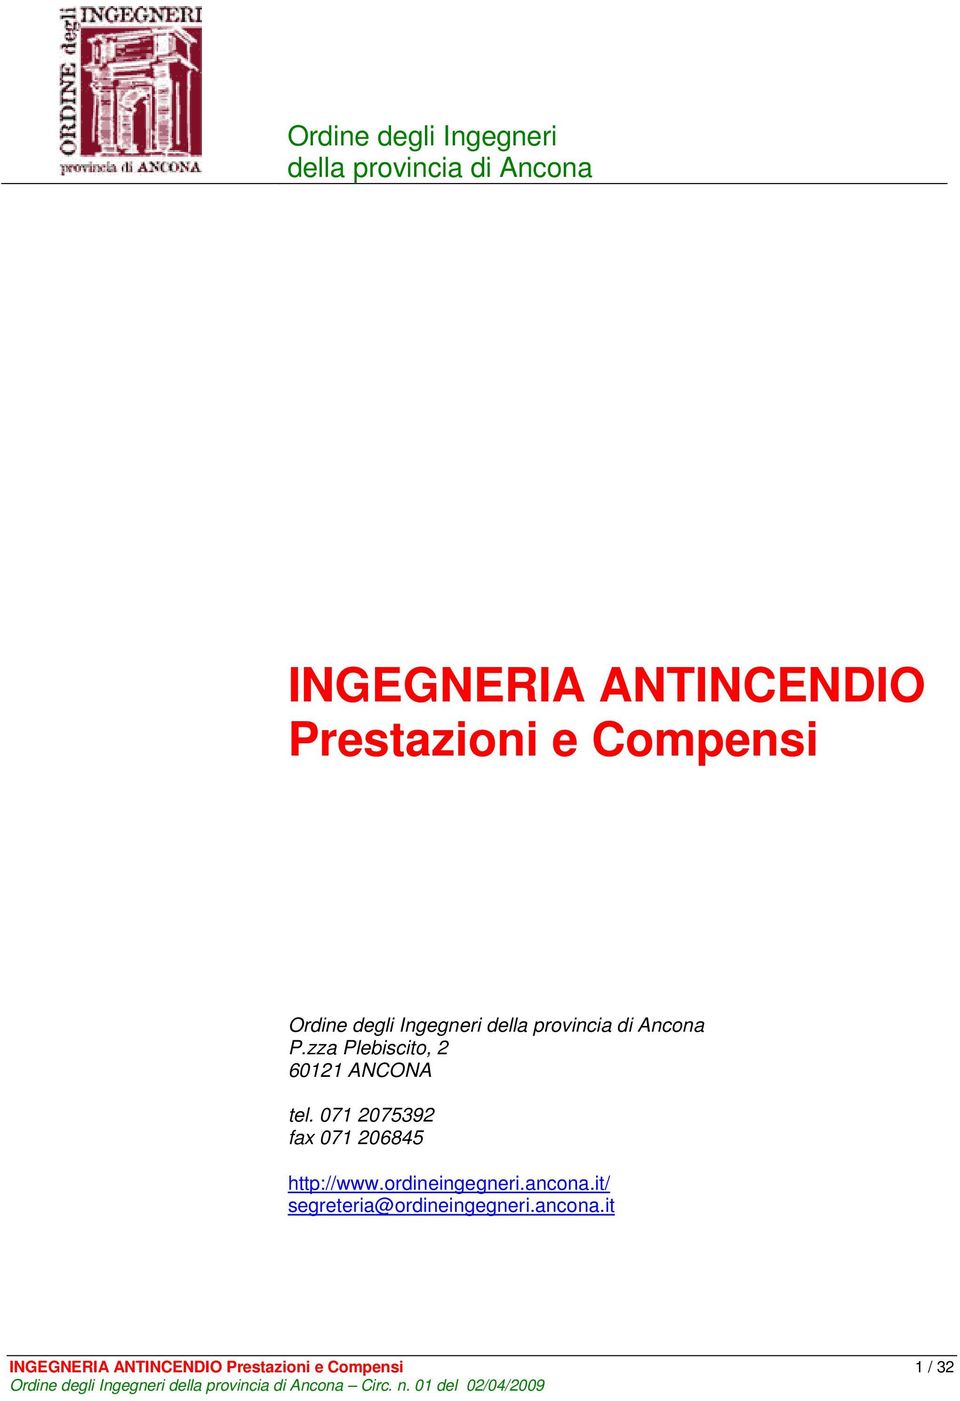 071 07539 fax 071 05 http://www.ordineingegneri.ancona.